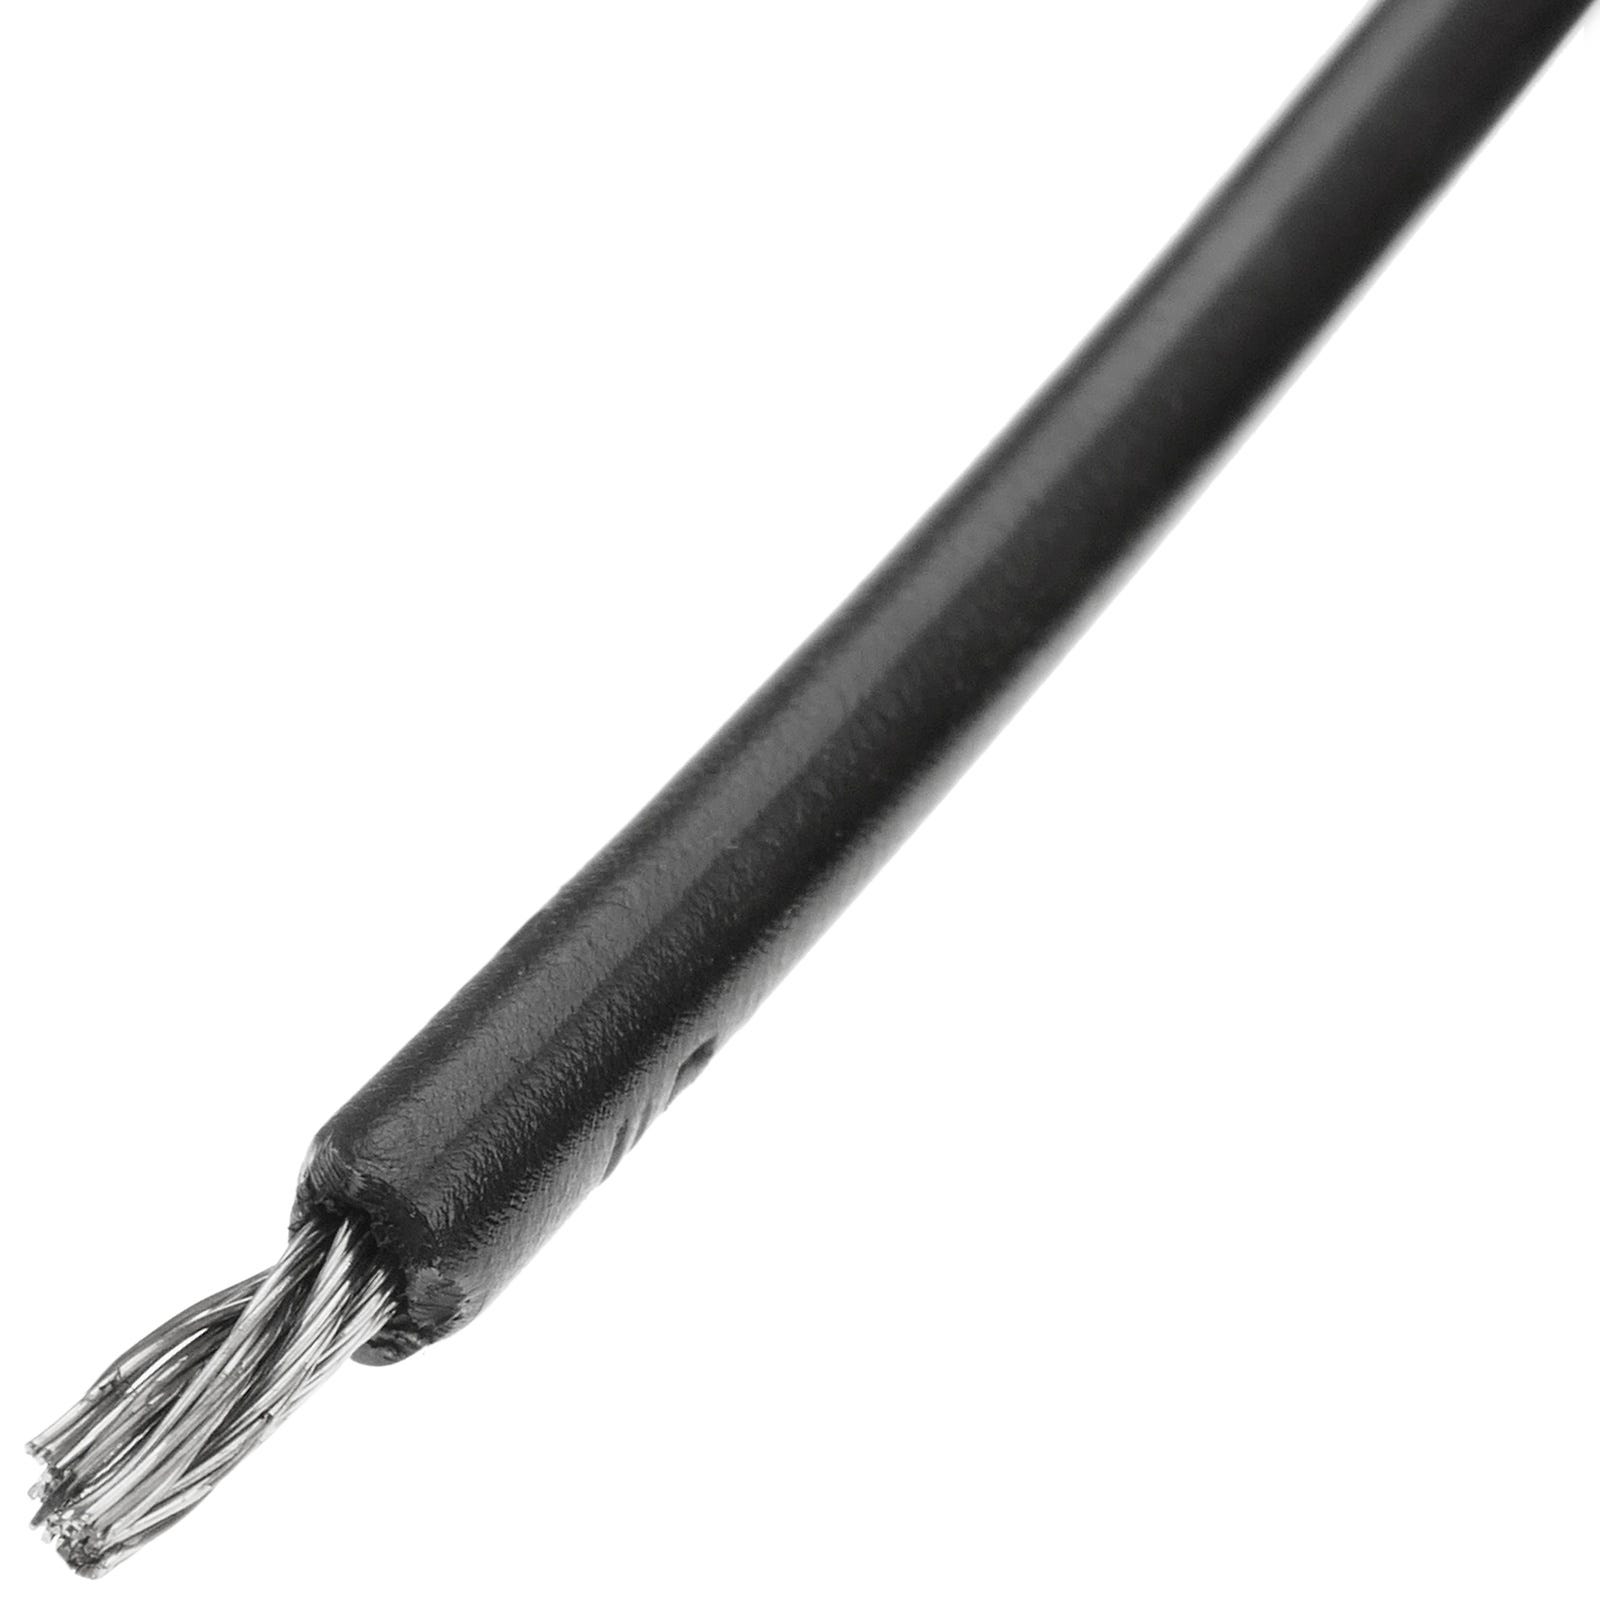 Cable De Acero Inoxidable 7x7